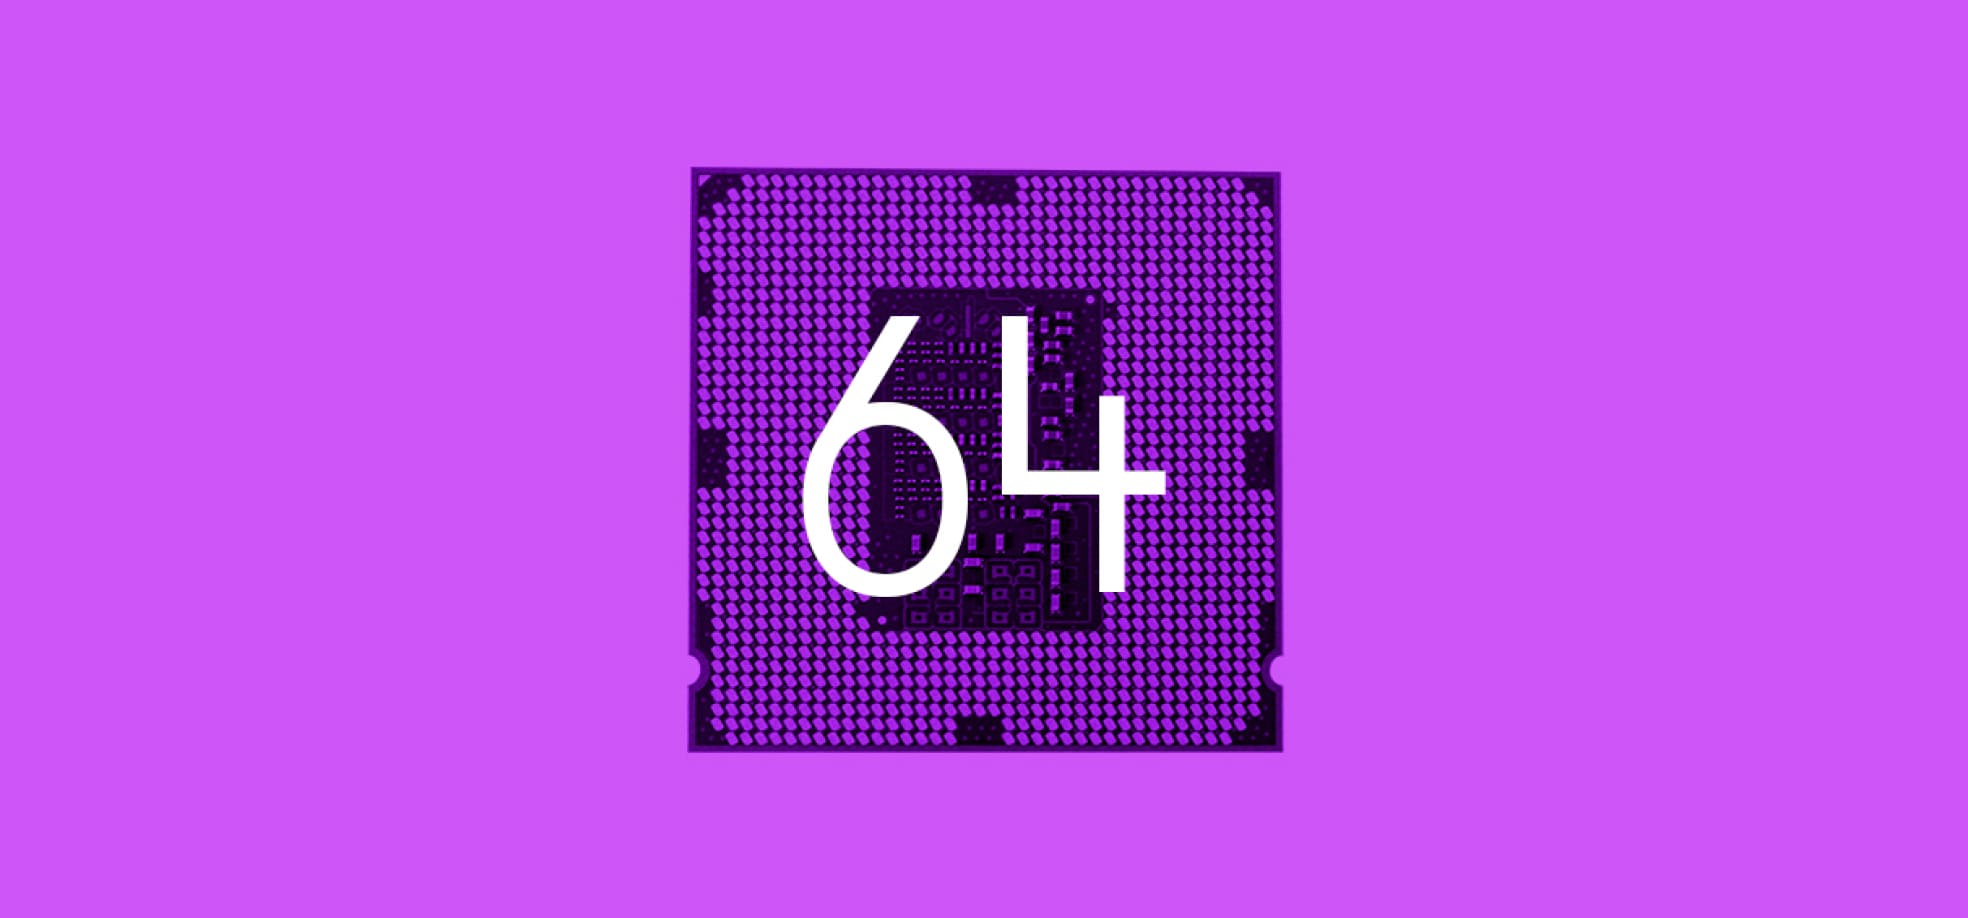 64-bit compatibility illustration on a purple background